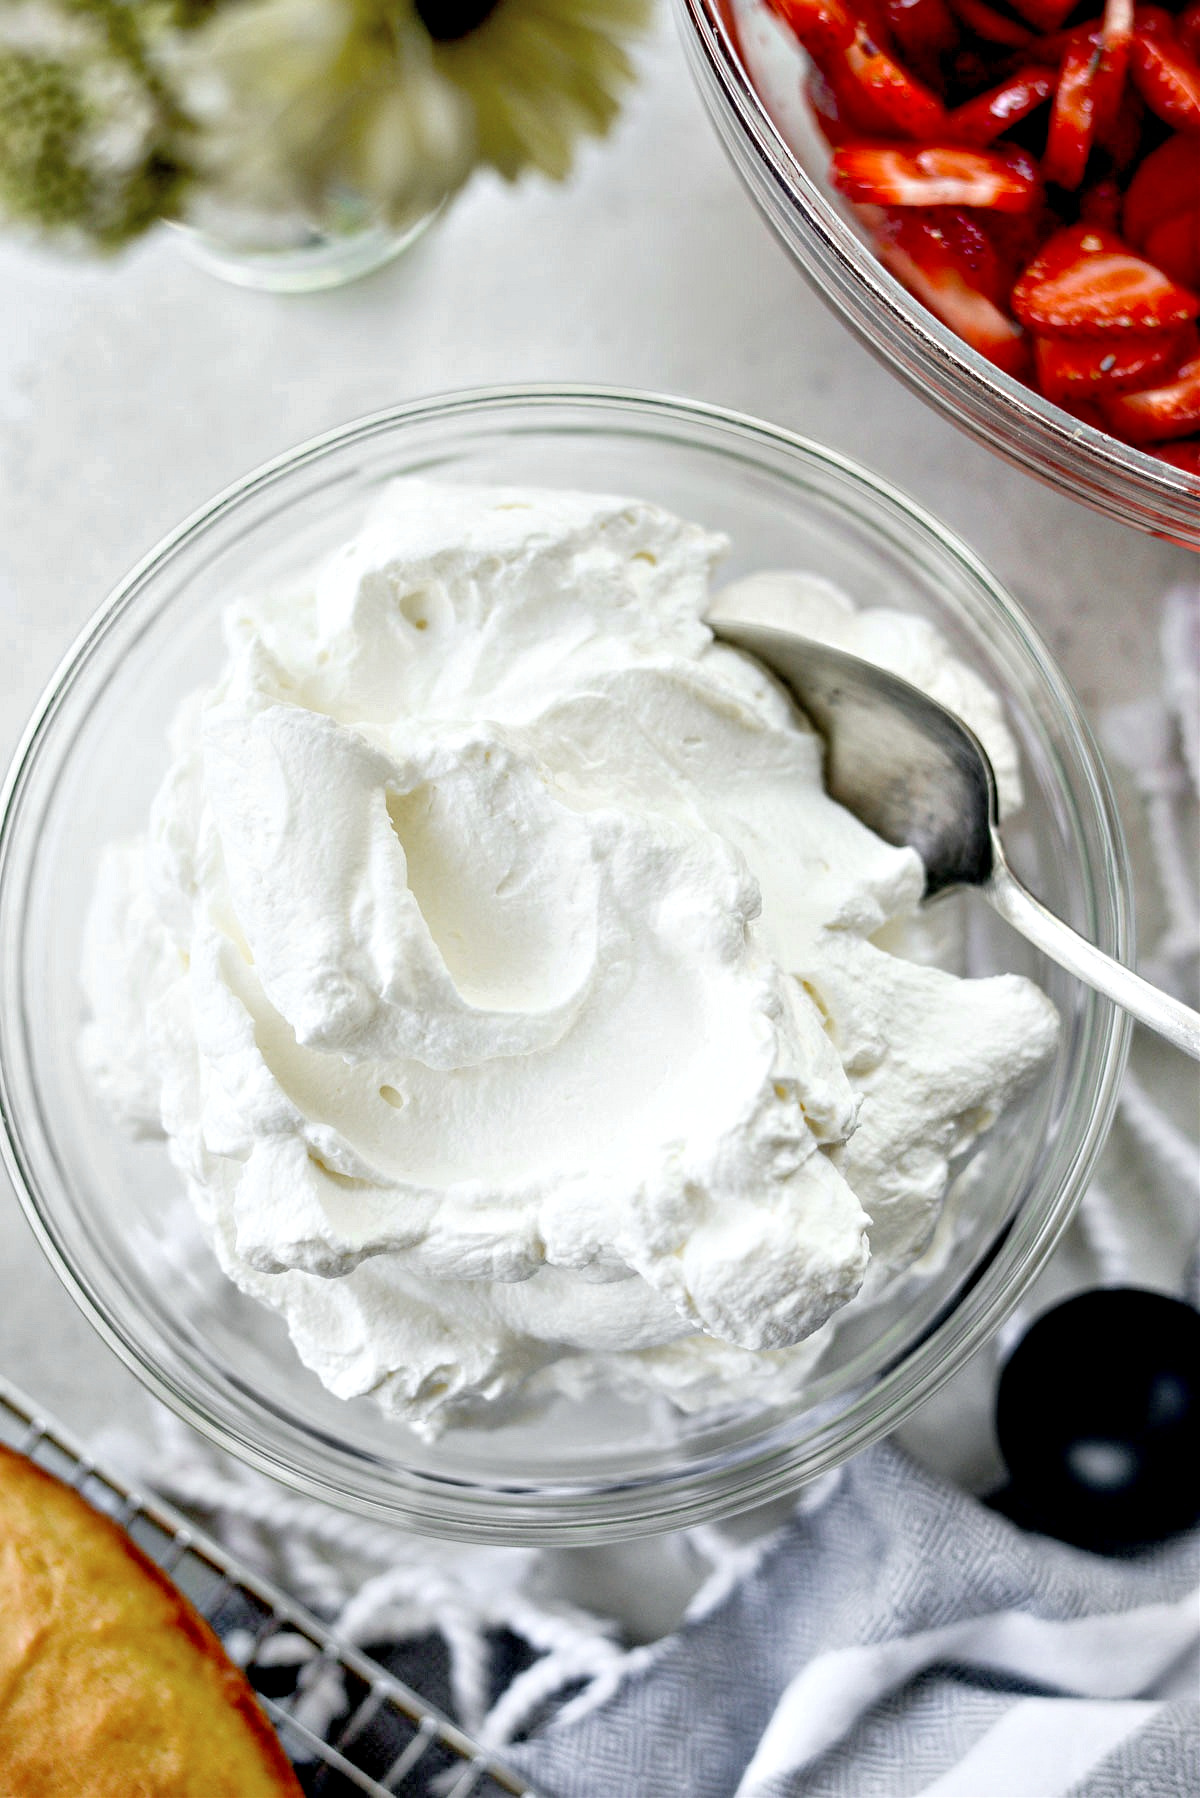 https://www.simplyscratch.com/wp-content/uploads/2022/06/Best-Homemade-Whipped-Cream-Recipe-l-SimplyScratch.com-14.jpg